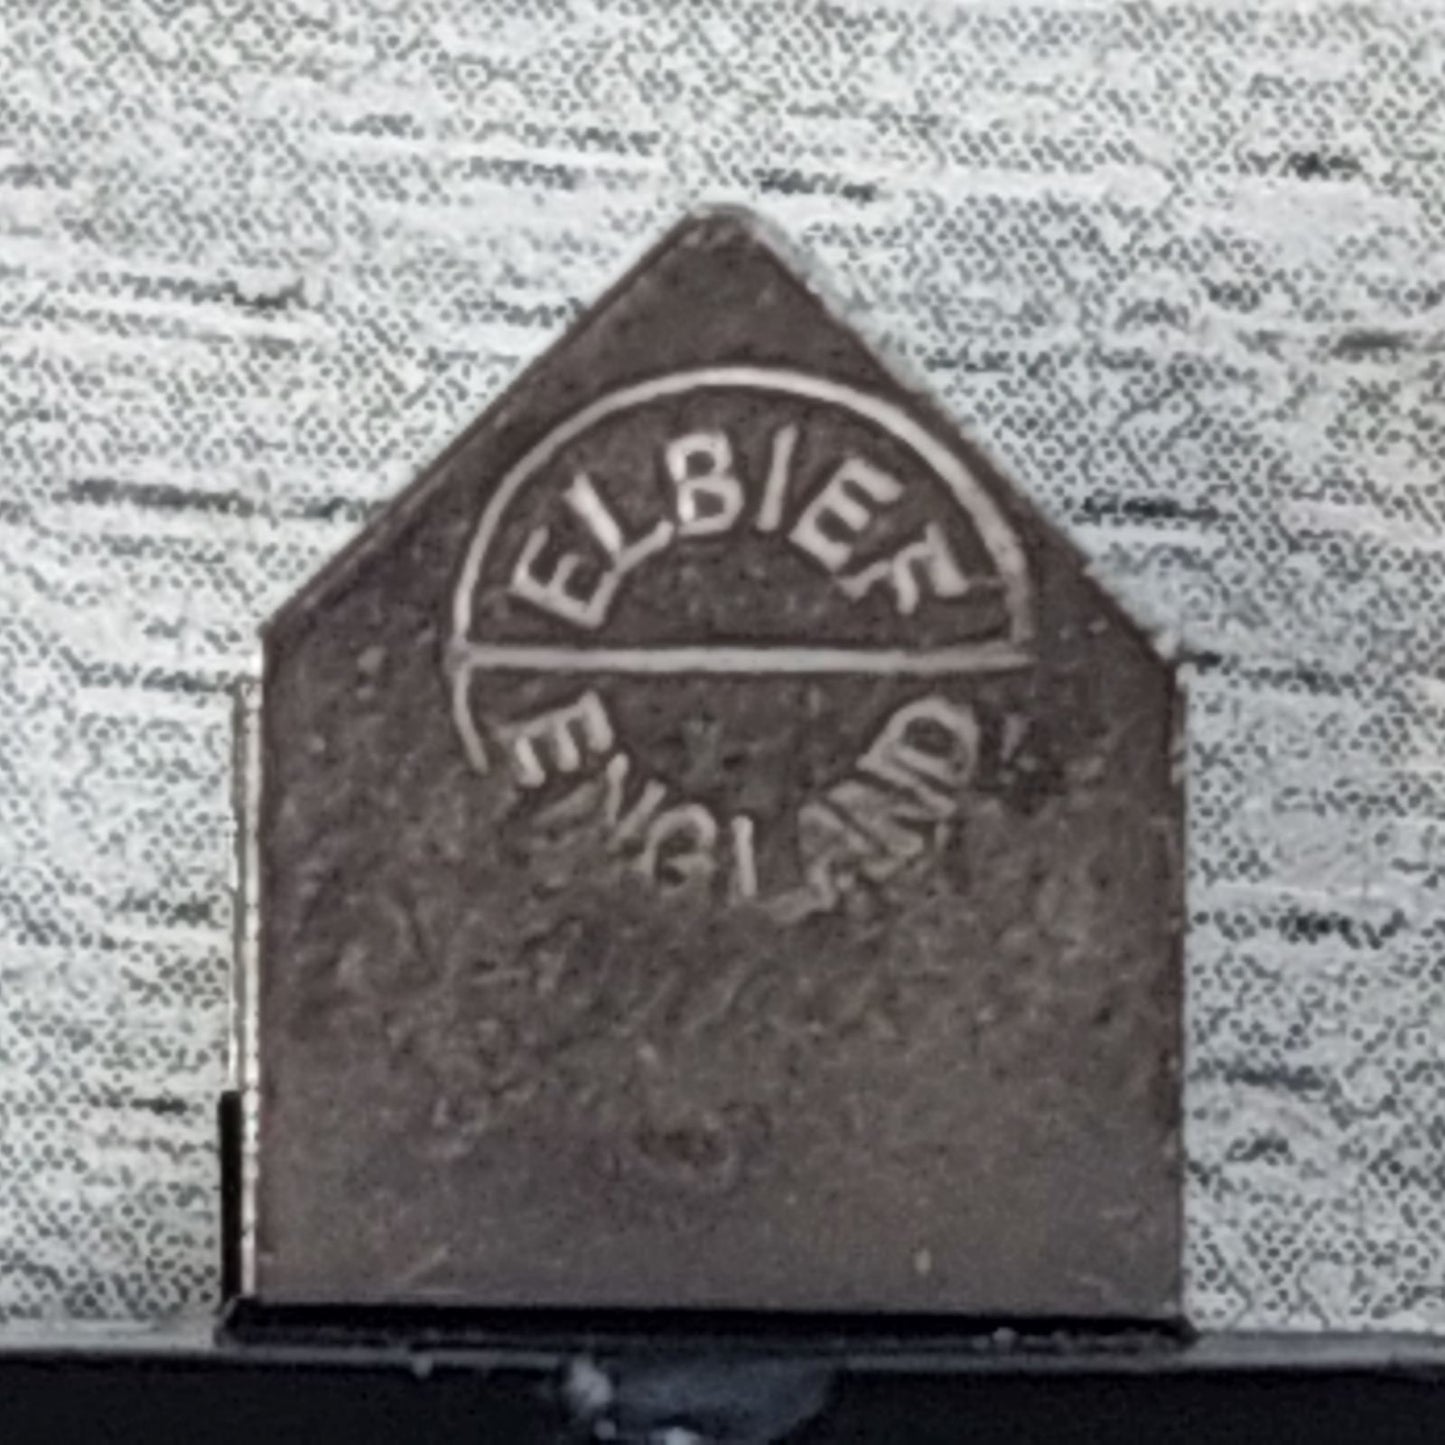 Vintage ELBIEF English Bag Closure Set